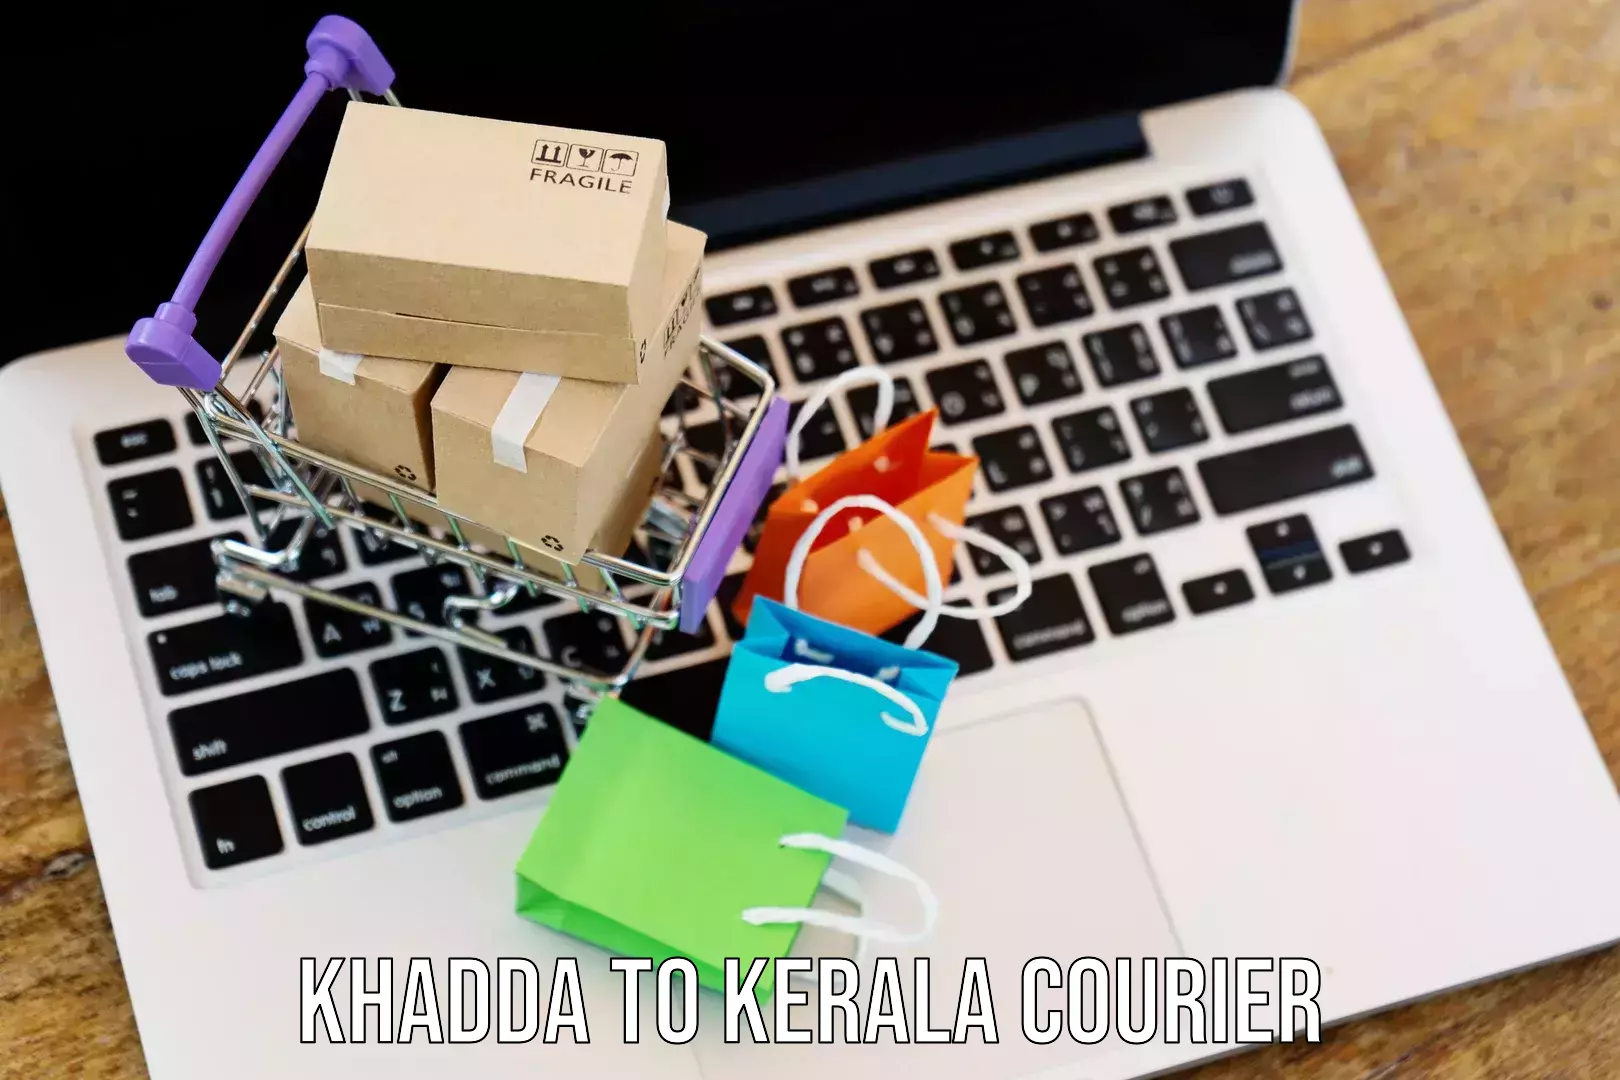 Advanced tracking systems Khadda to Kerala